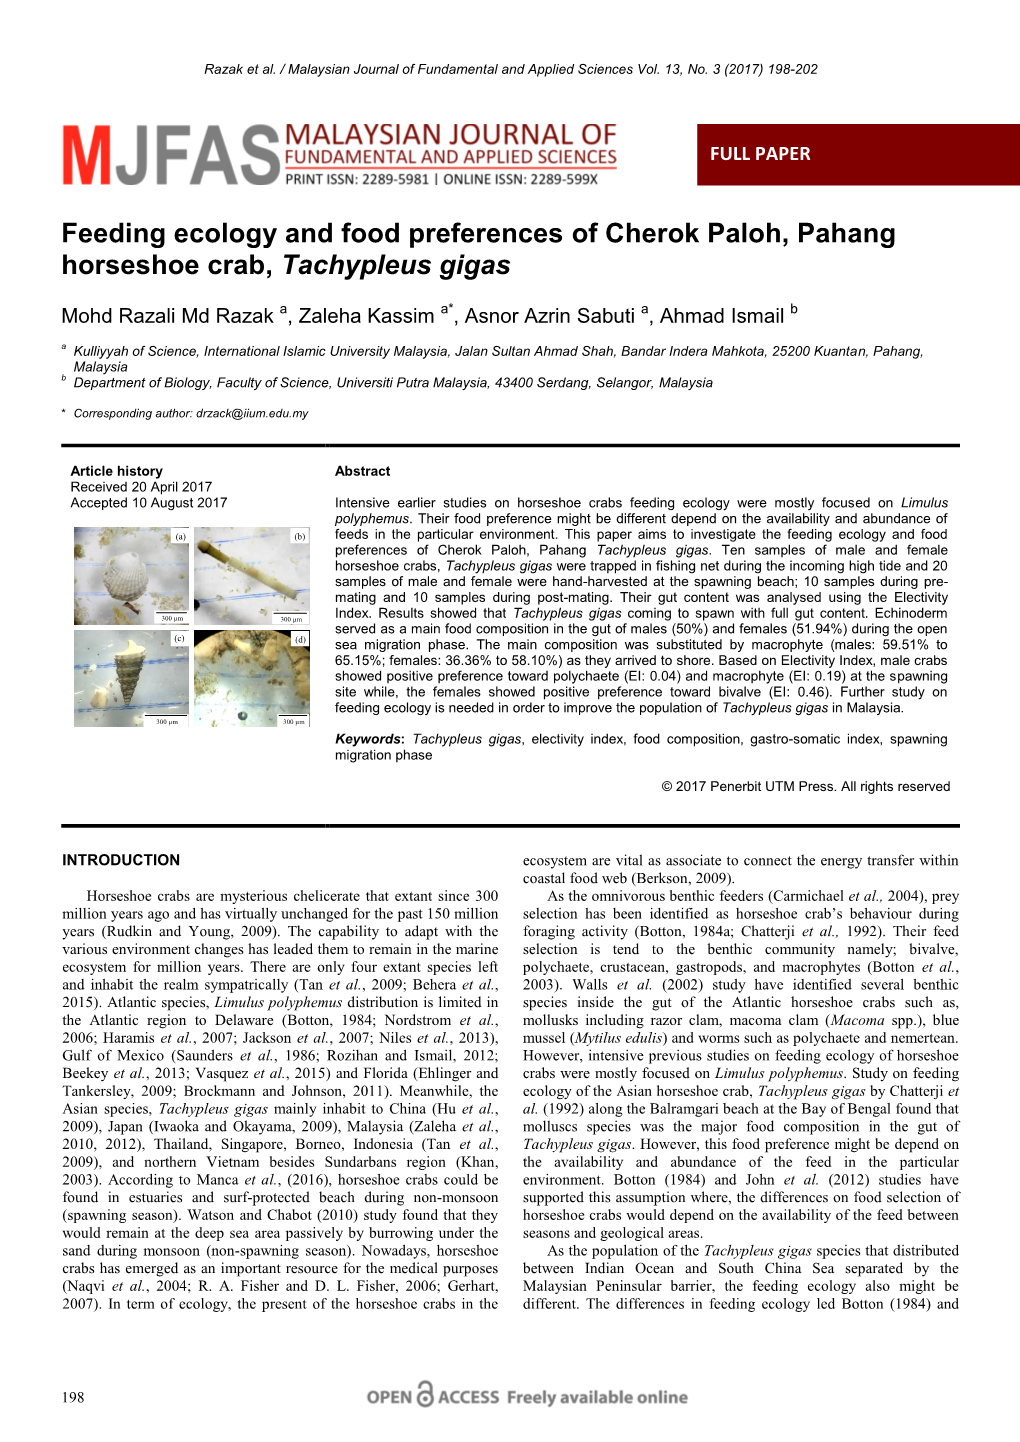 Feeding Ecology and Food Preferences of Cherok Paloh, Pahang Horseshoe Crab, Tachypleus Gigas